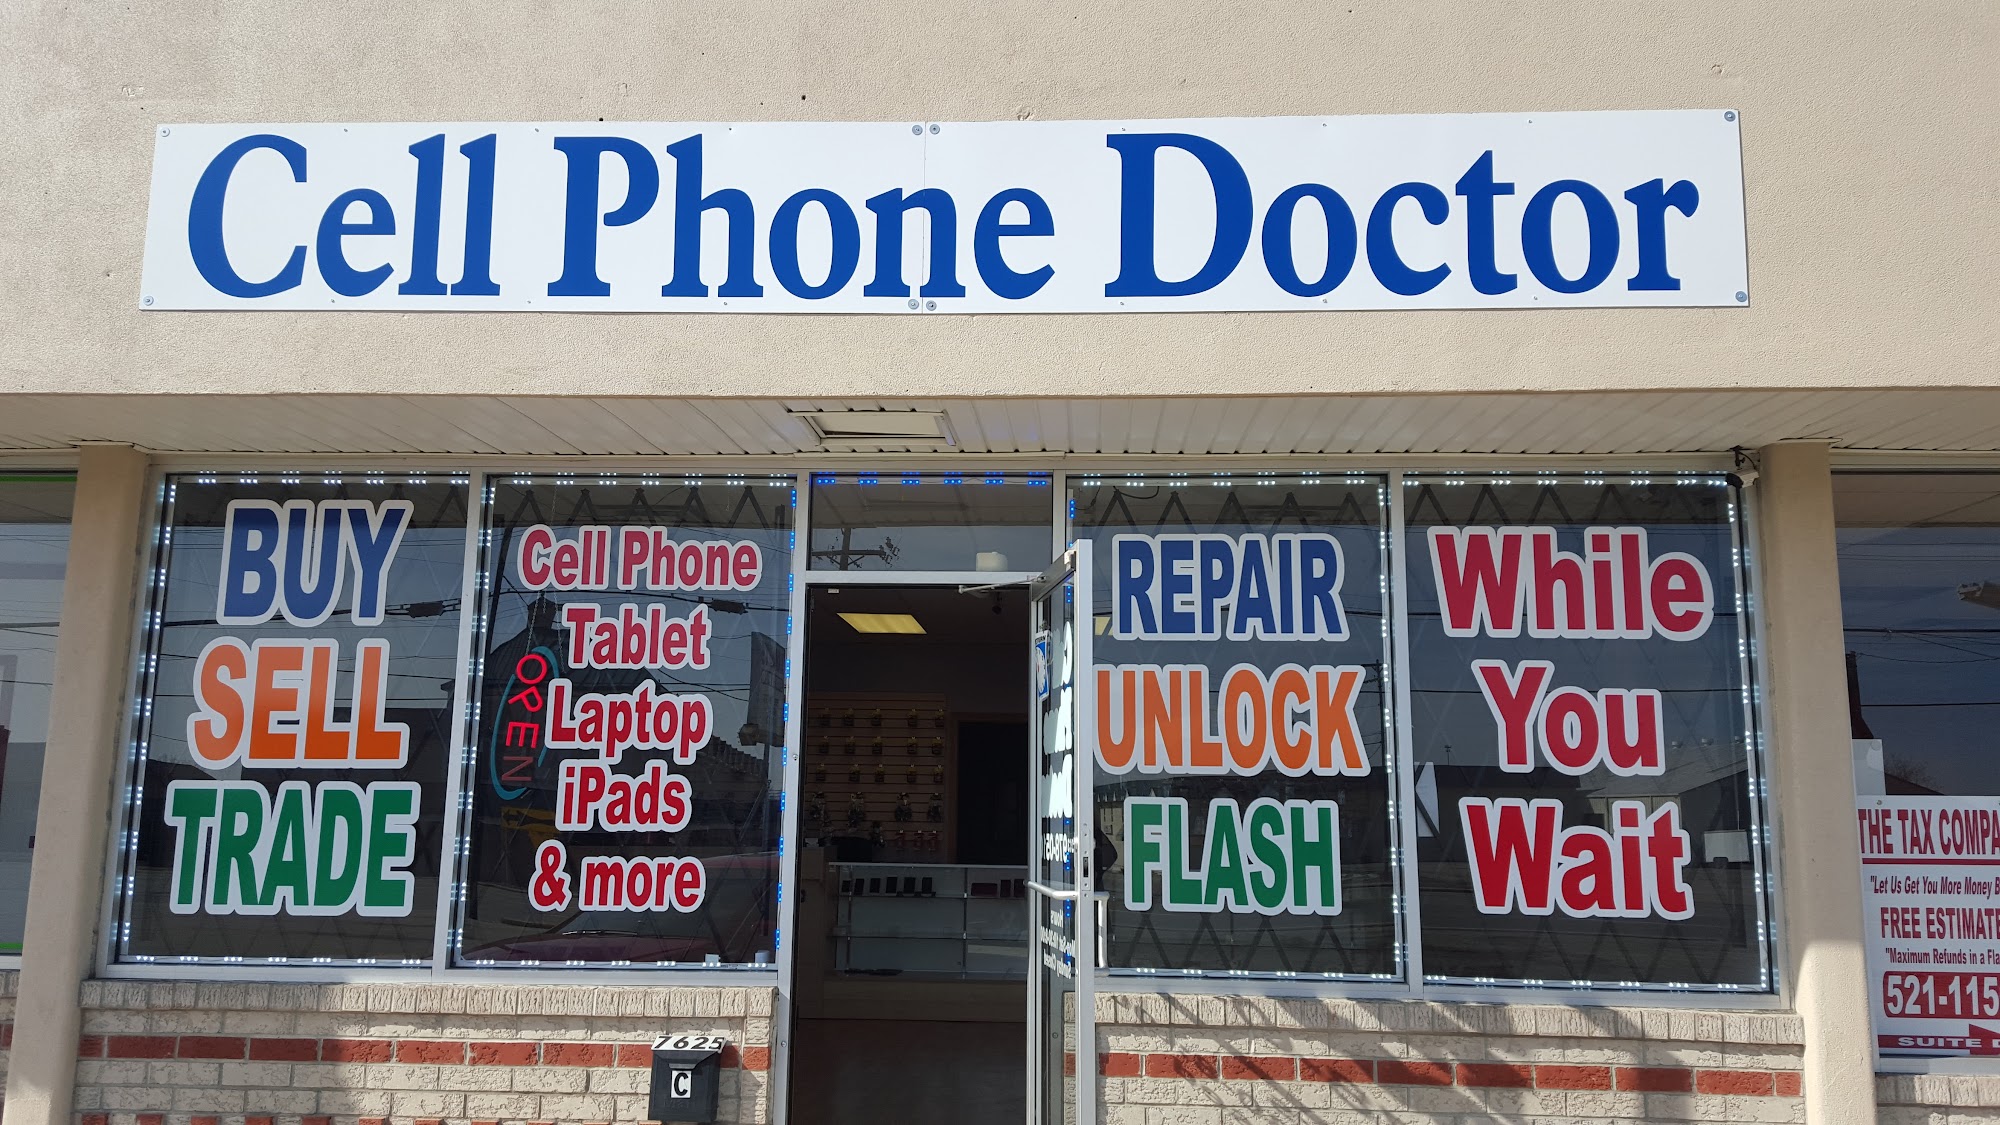 Cell Phone Doctor serving Cincinnati & butler county Area